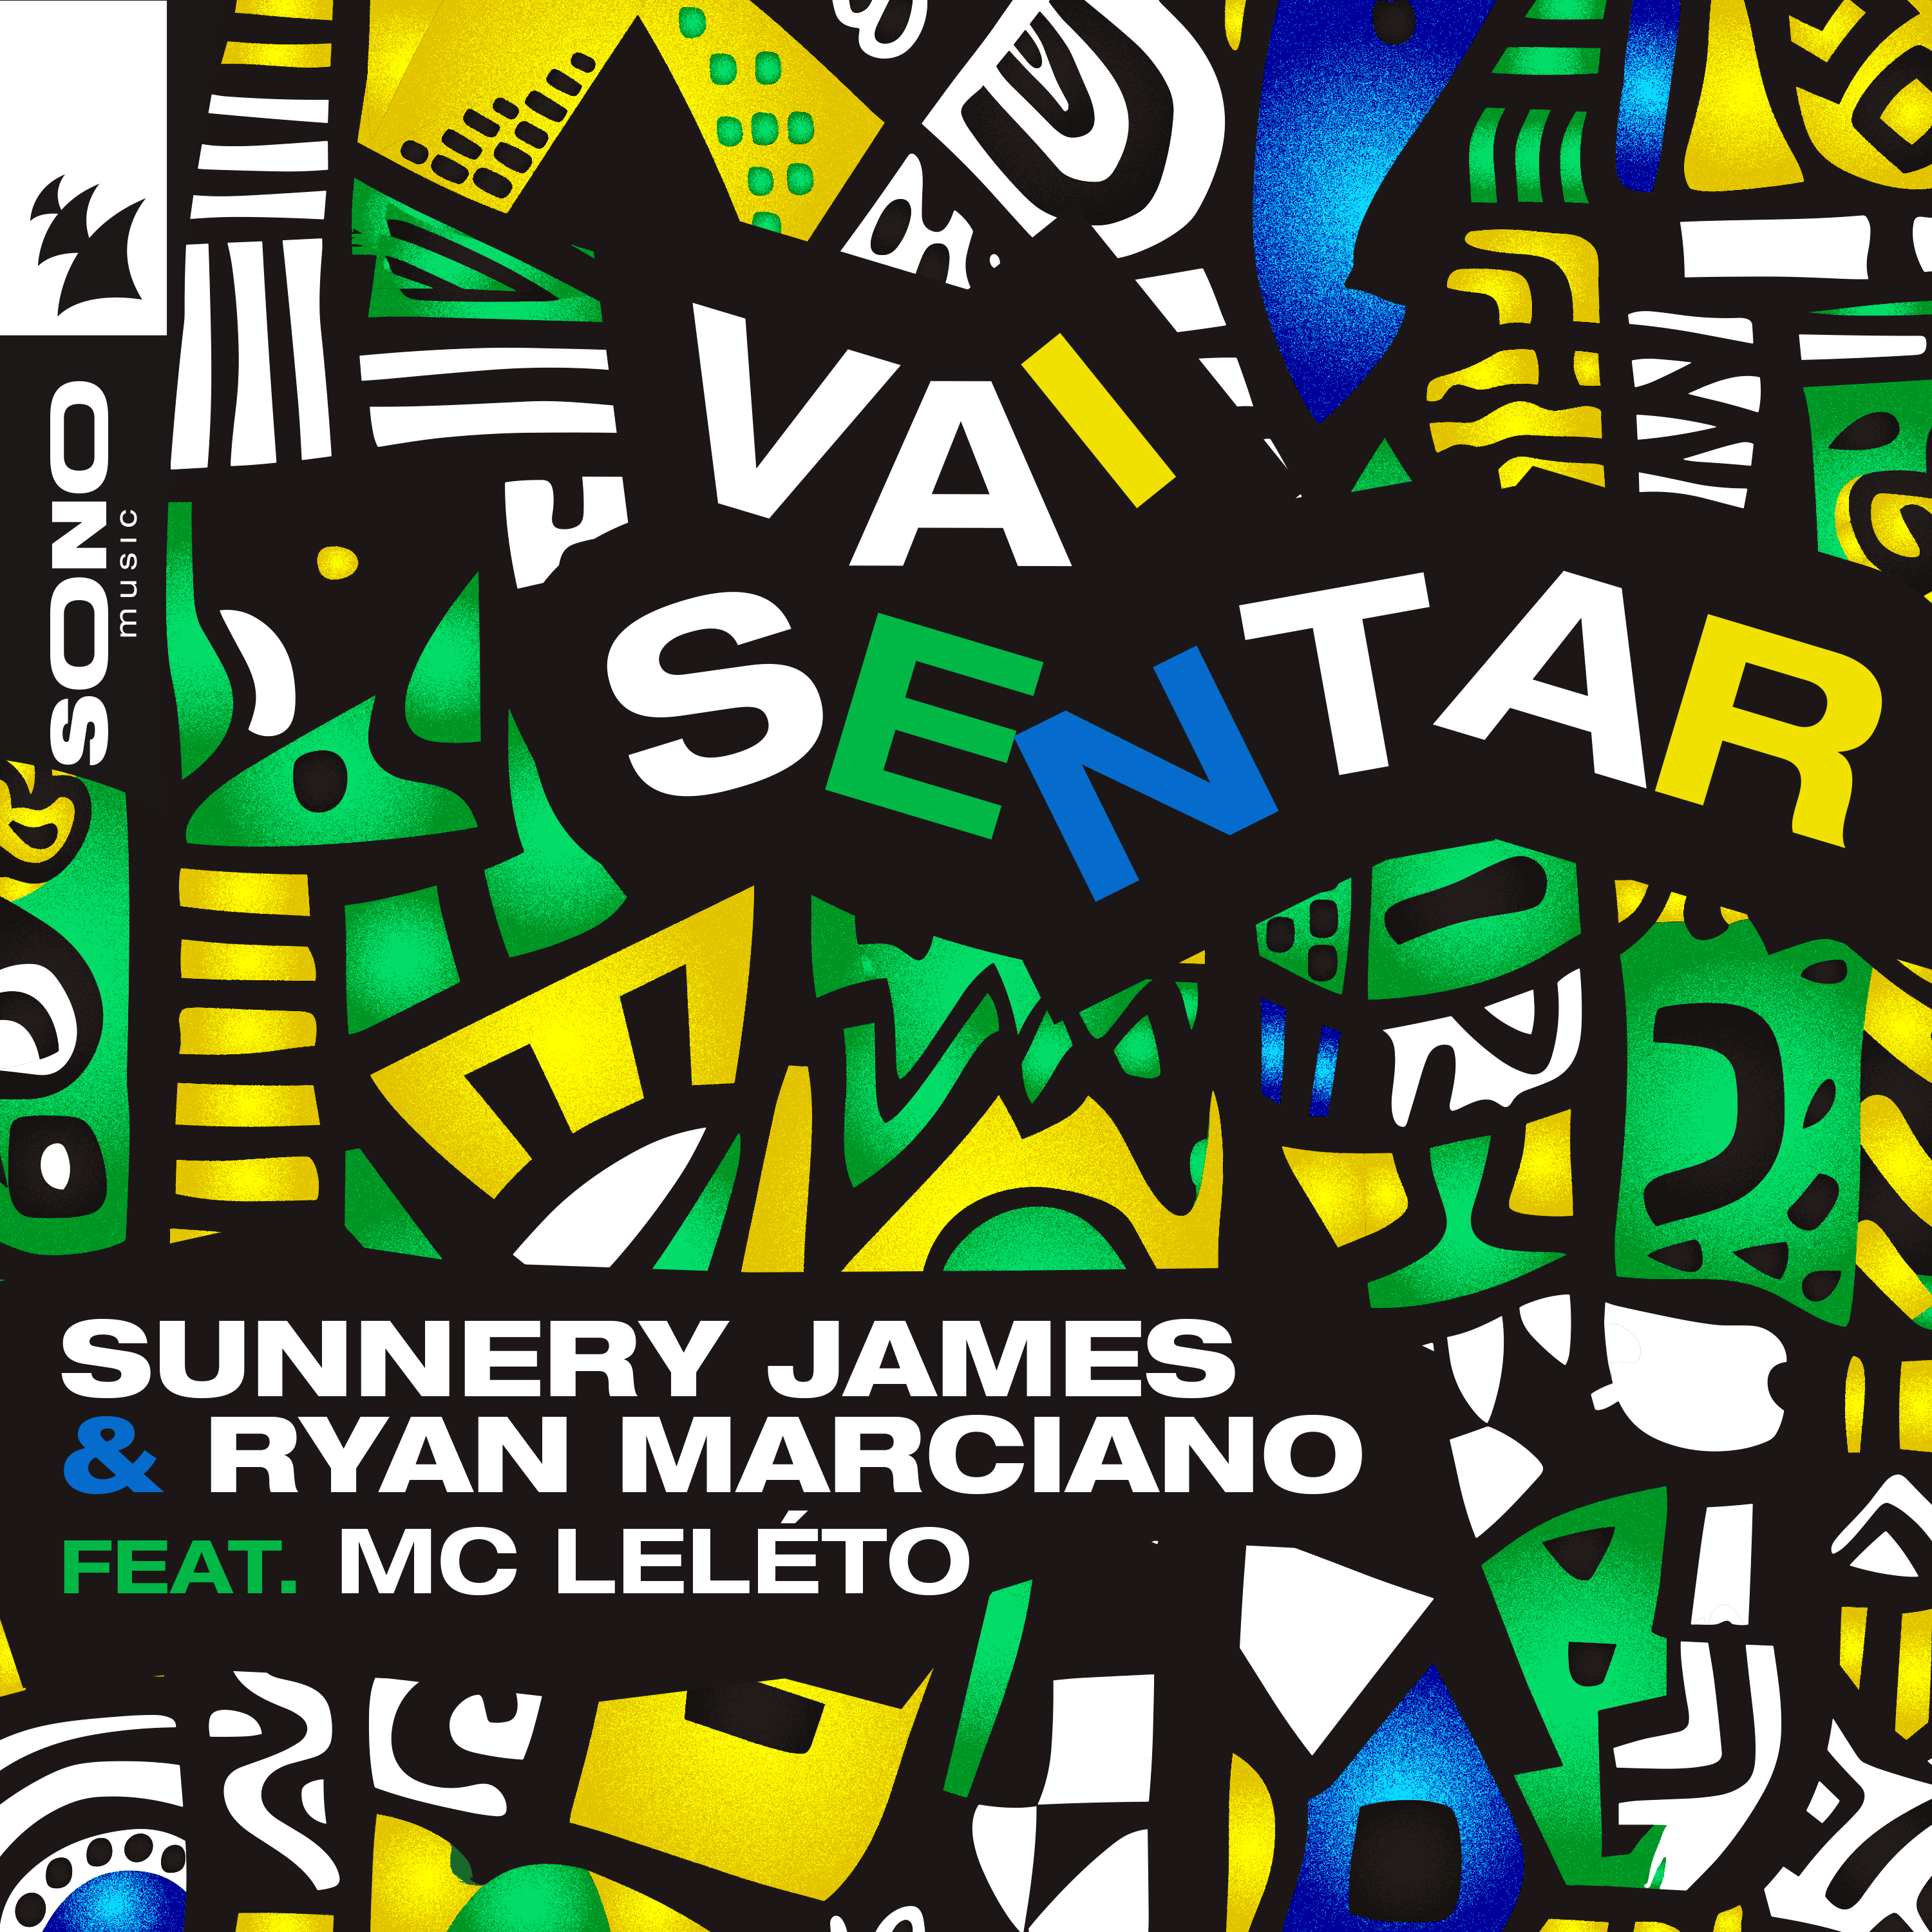 You Got me Calling - Sunnery James & Ryan Marciano, YAX.X ft. Sabri